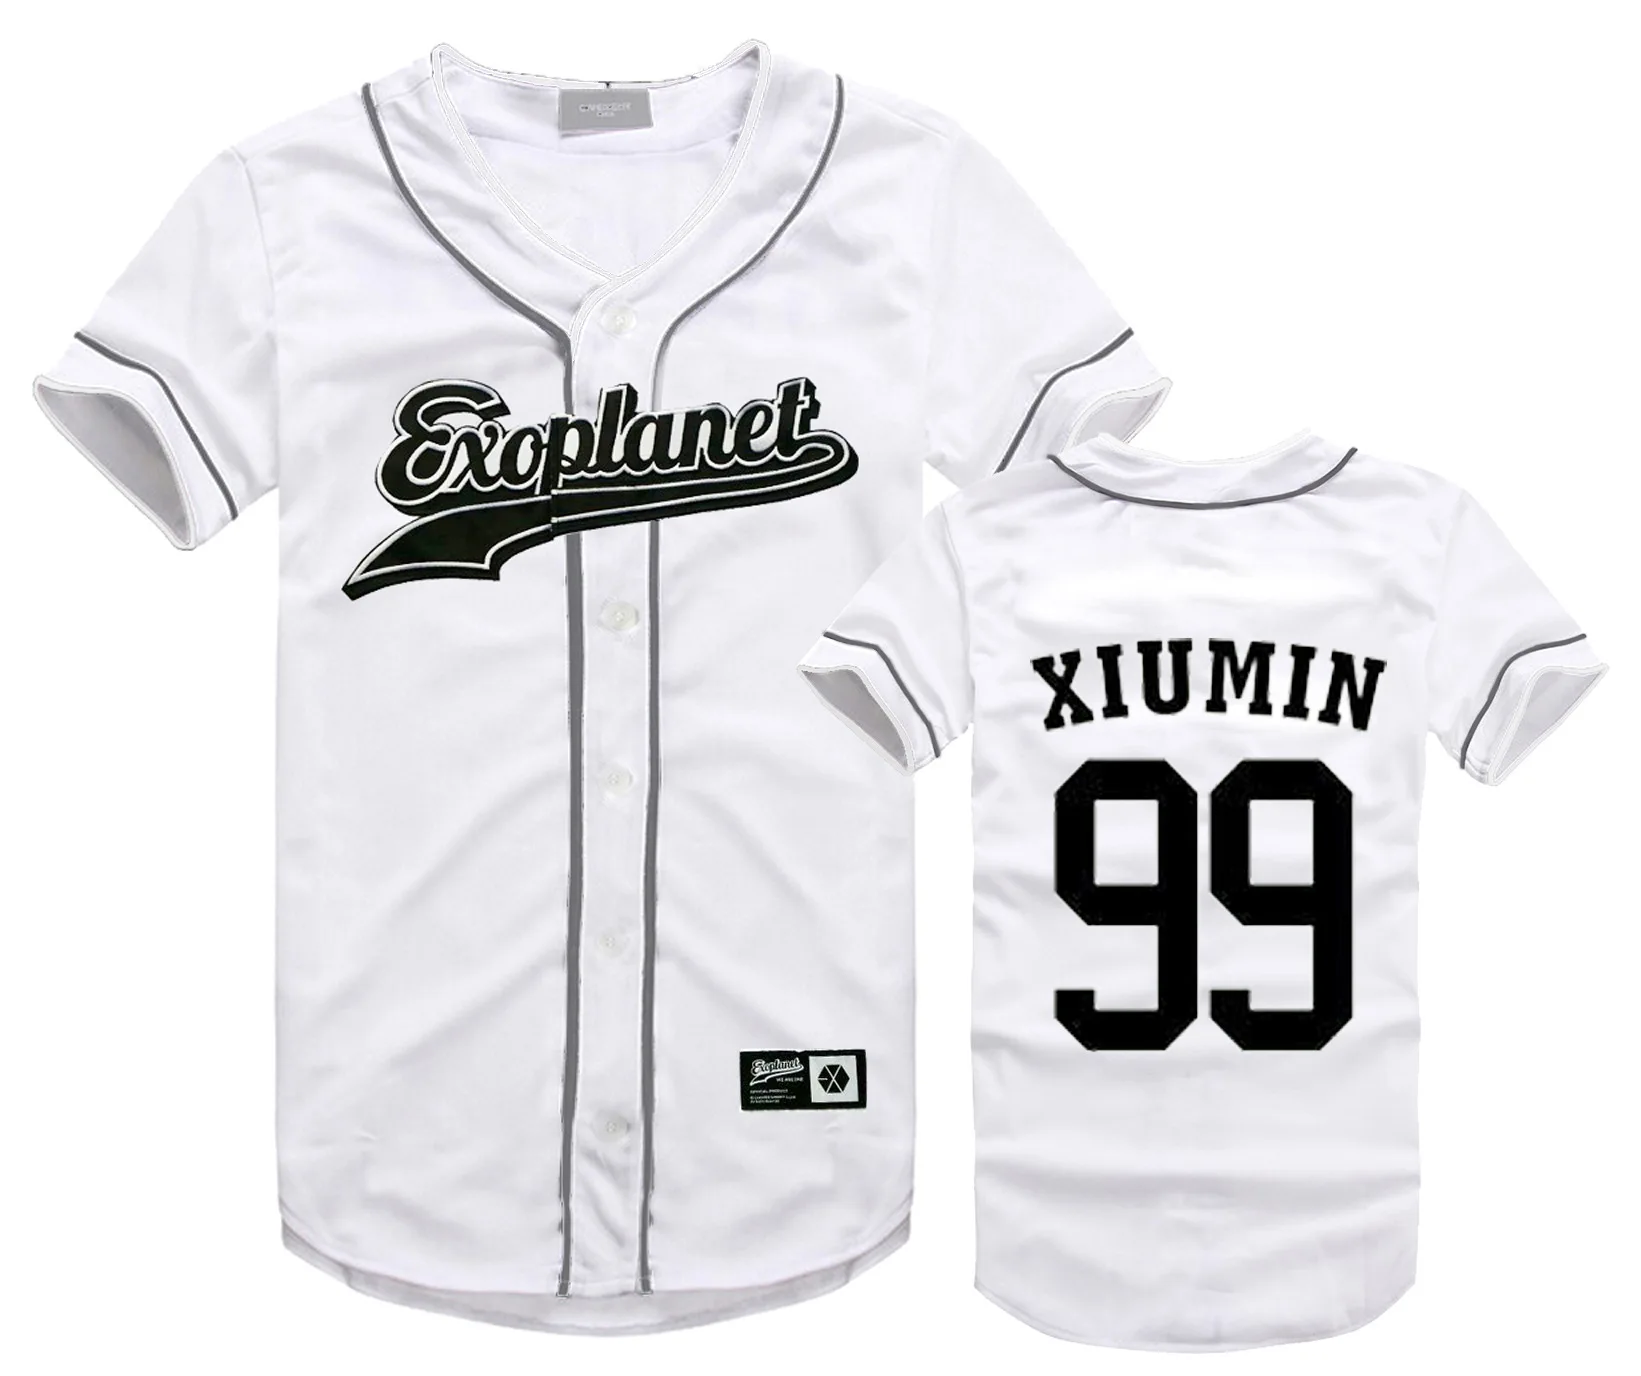 Бейсбольная Футболка Kpop EXO PLANET 3 EXO rDIUM In сеульская концертная футболка Chanyeol футболка Baekhyun Tee Chen Топы